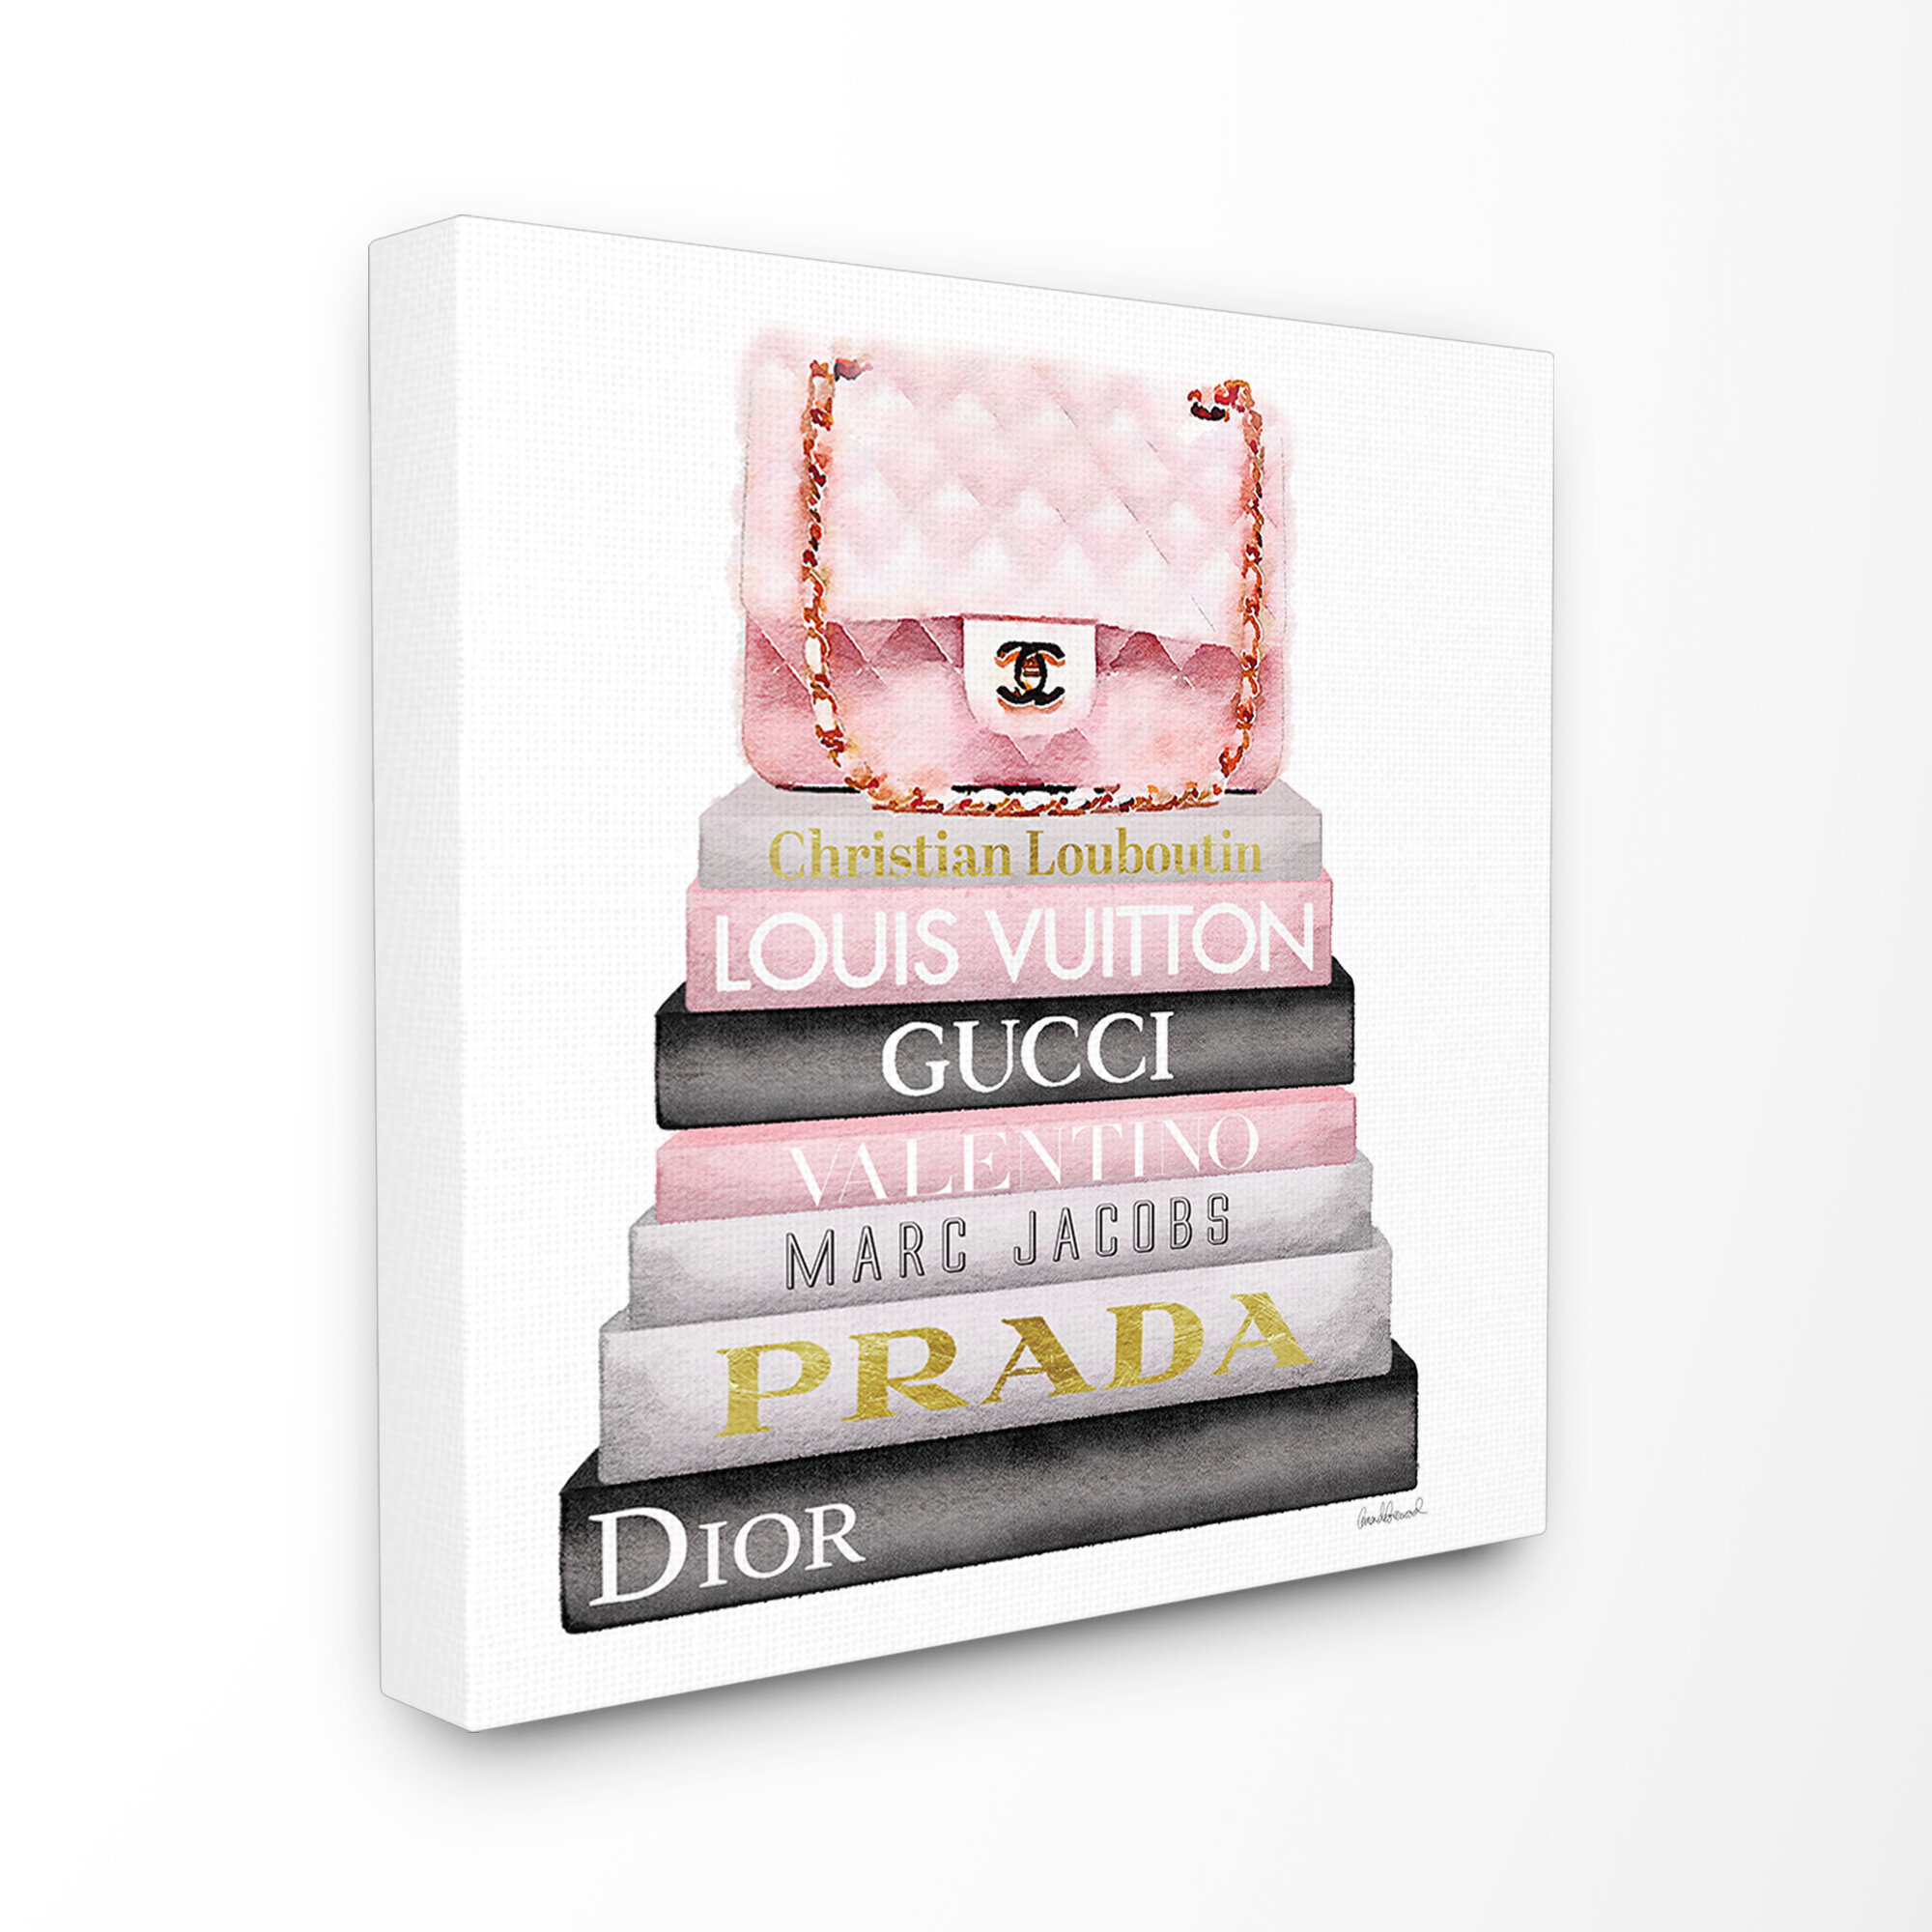 Stupell Industries Elegant Glam Fashion Floral Bag on Bookstack